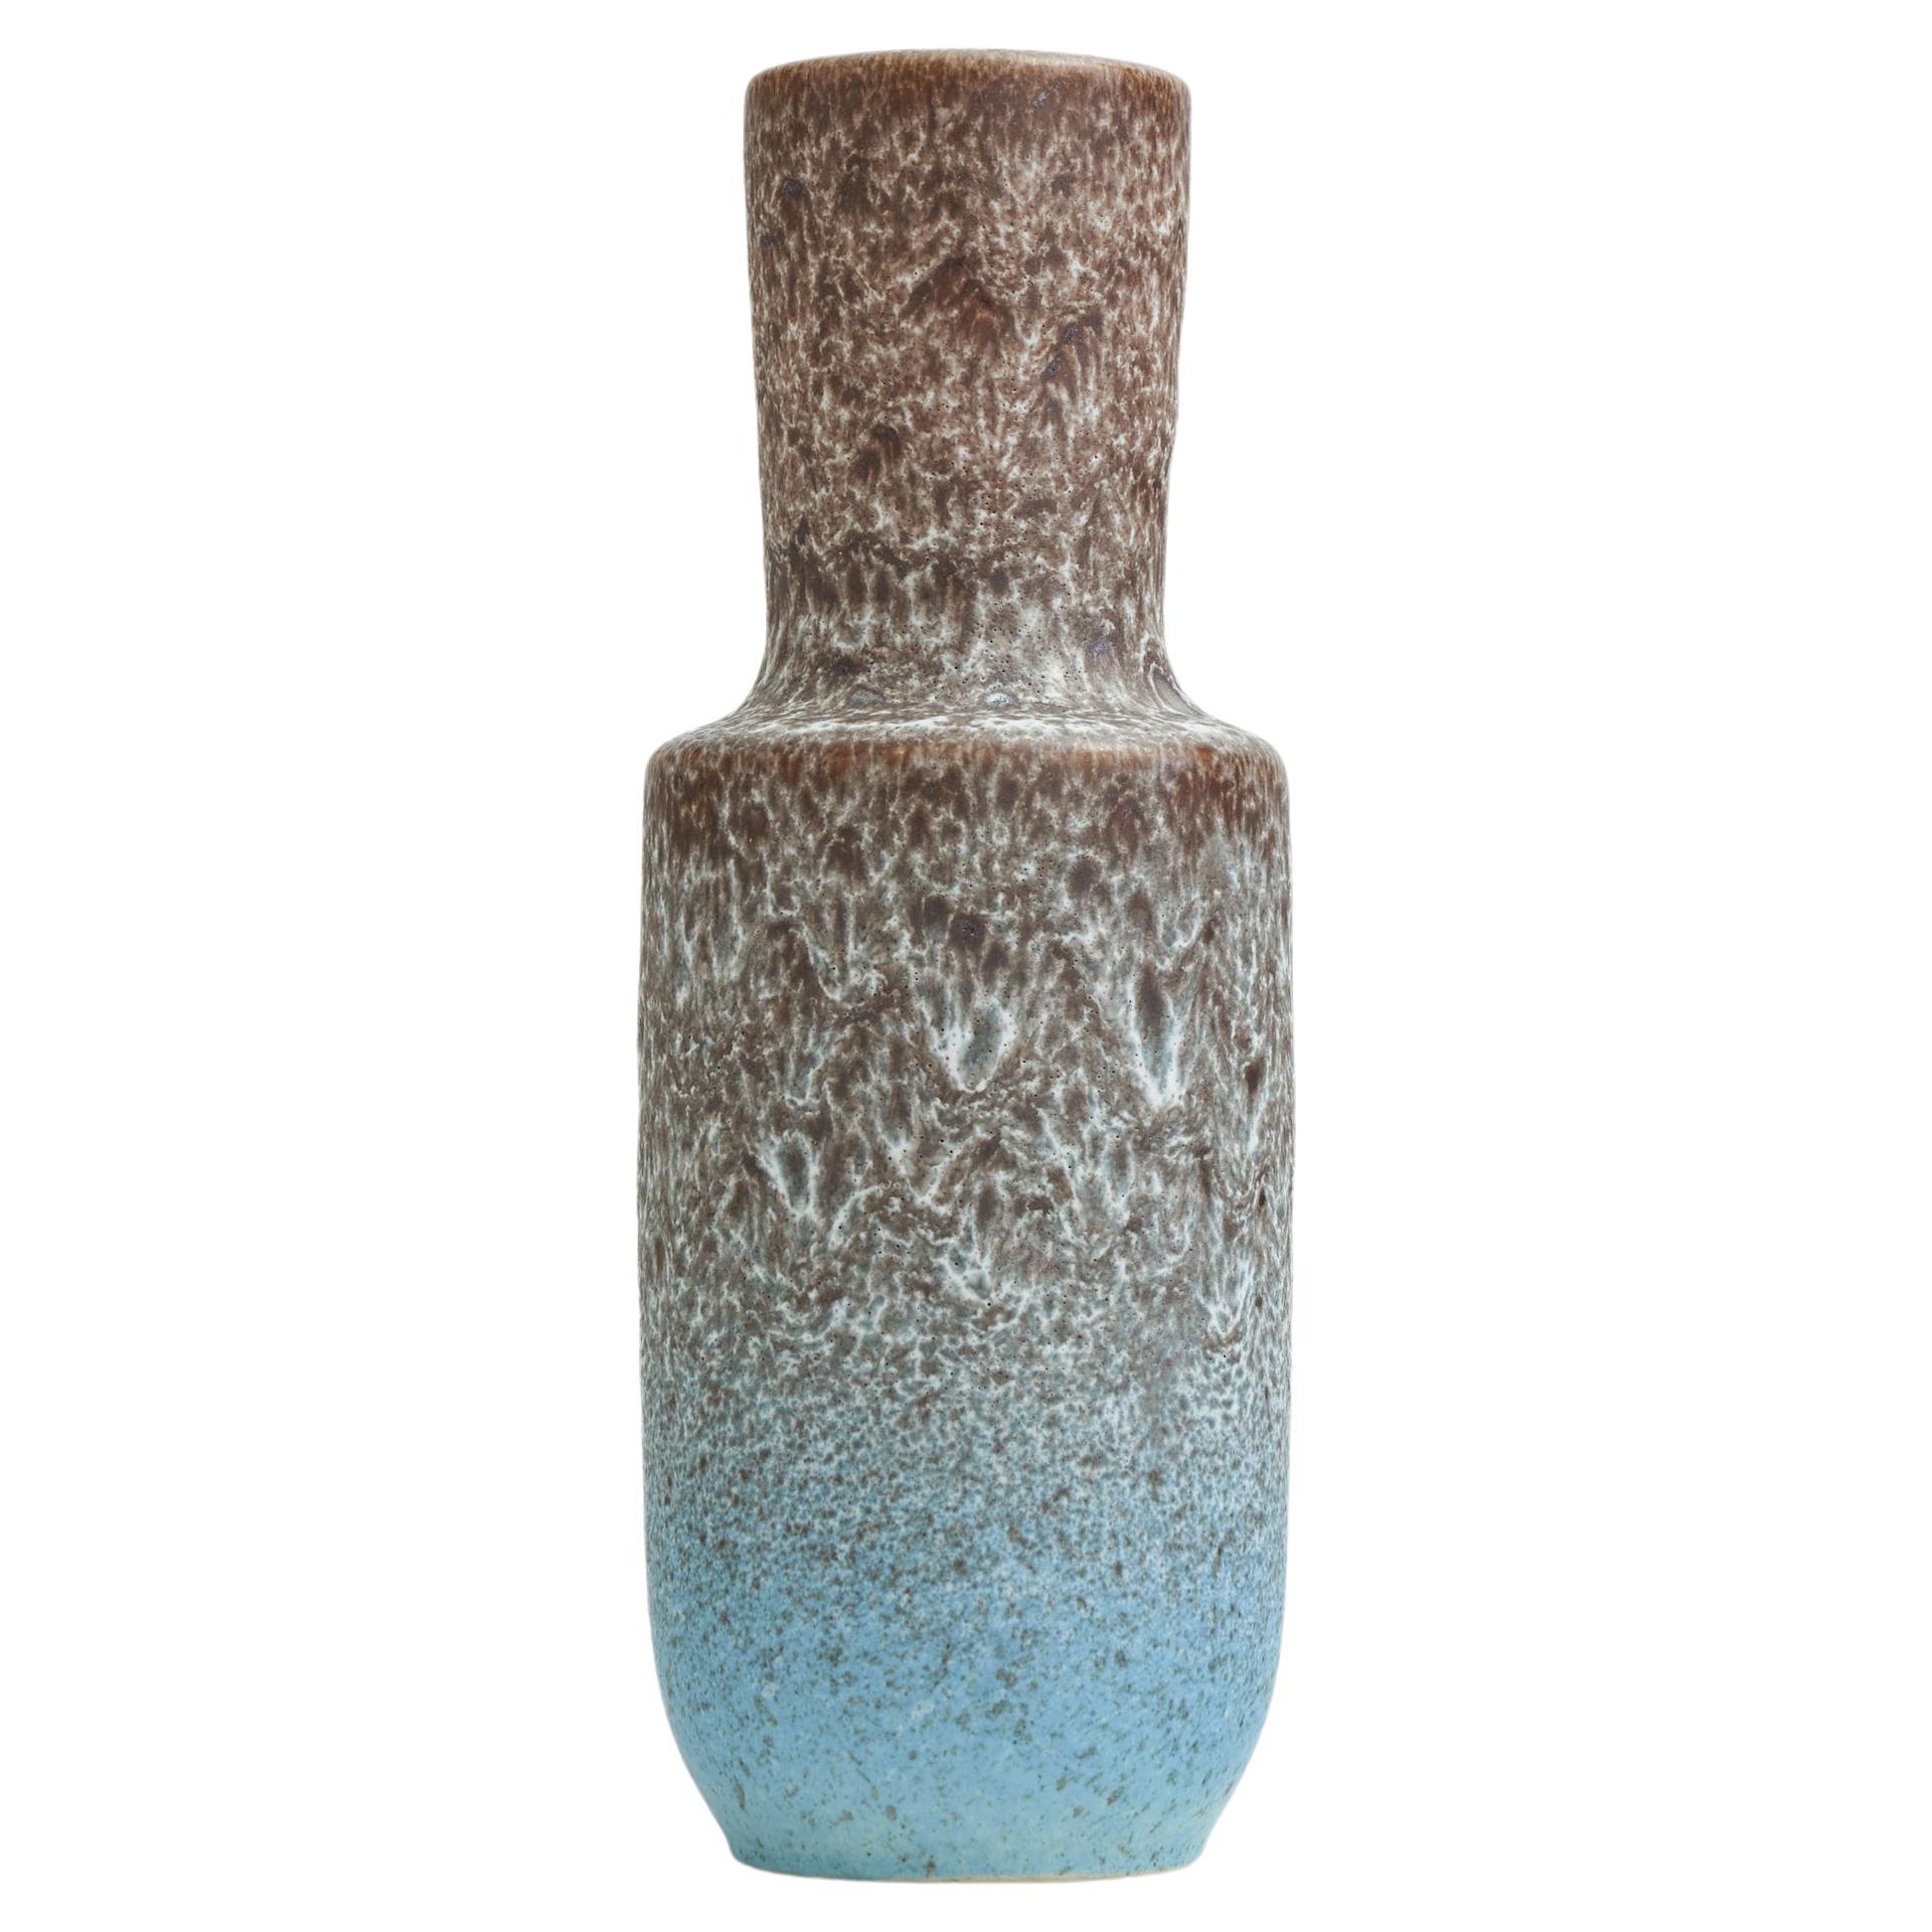 Volcanic Glazed Mid Century Pottery Vase by Steuler Keramik, 1960s